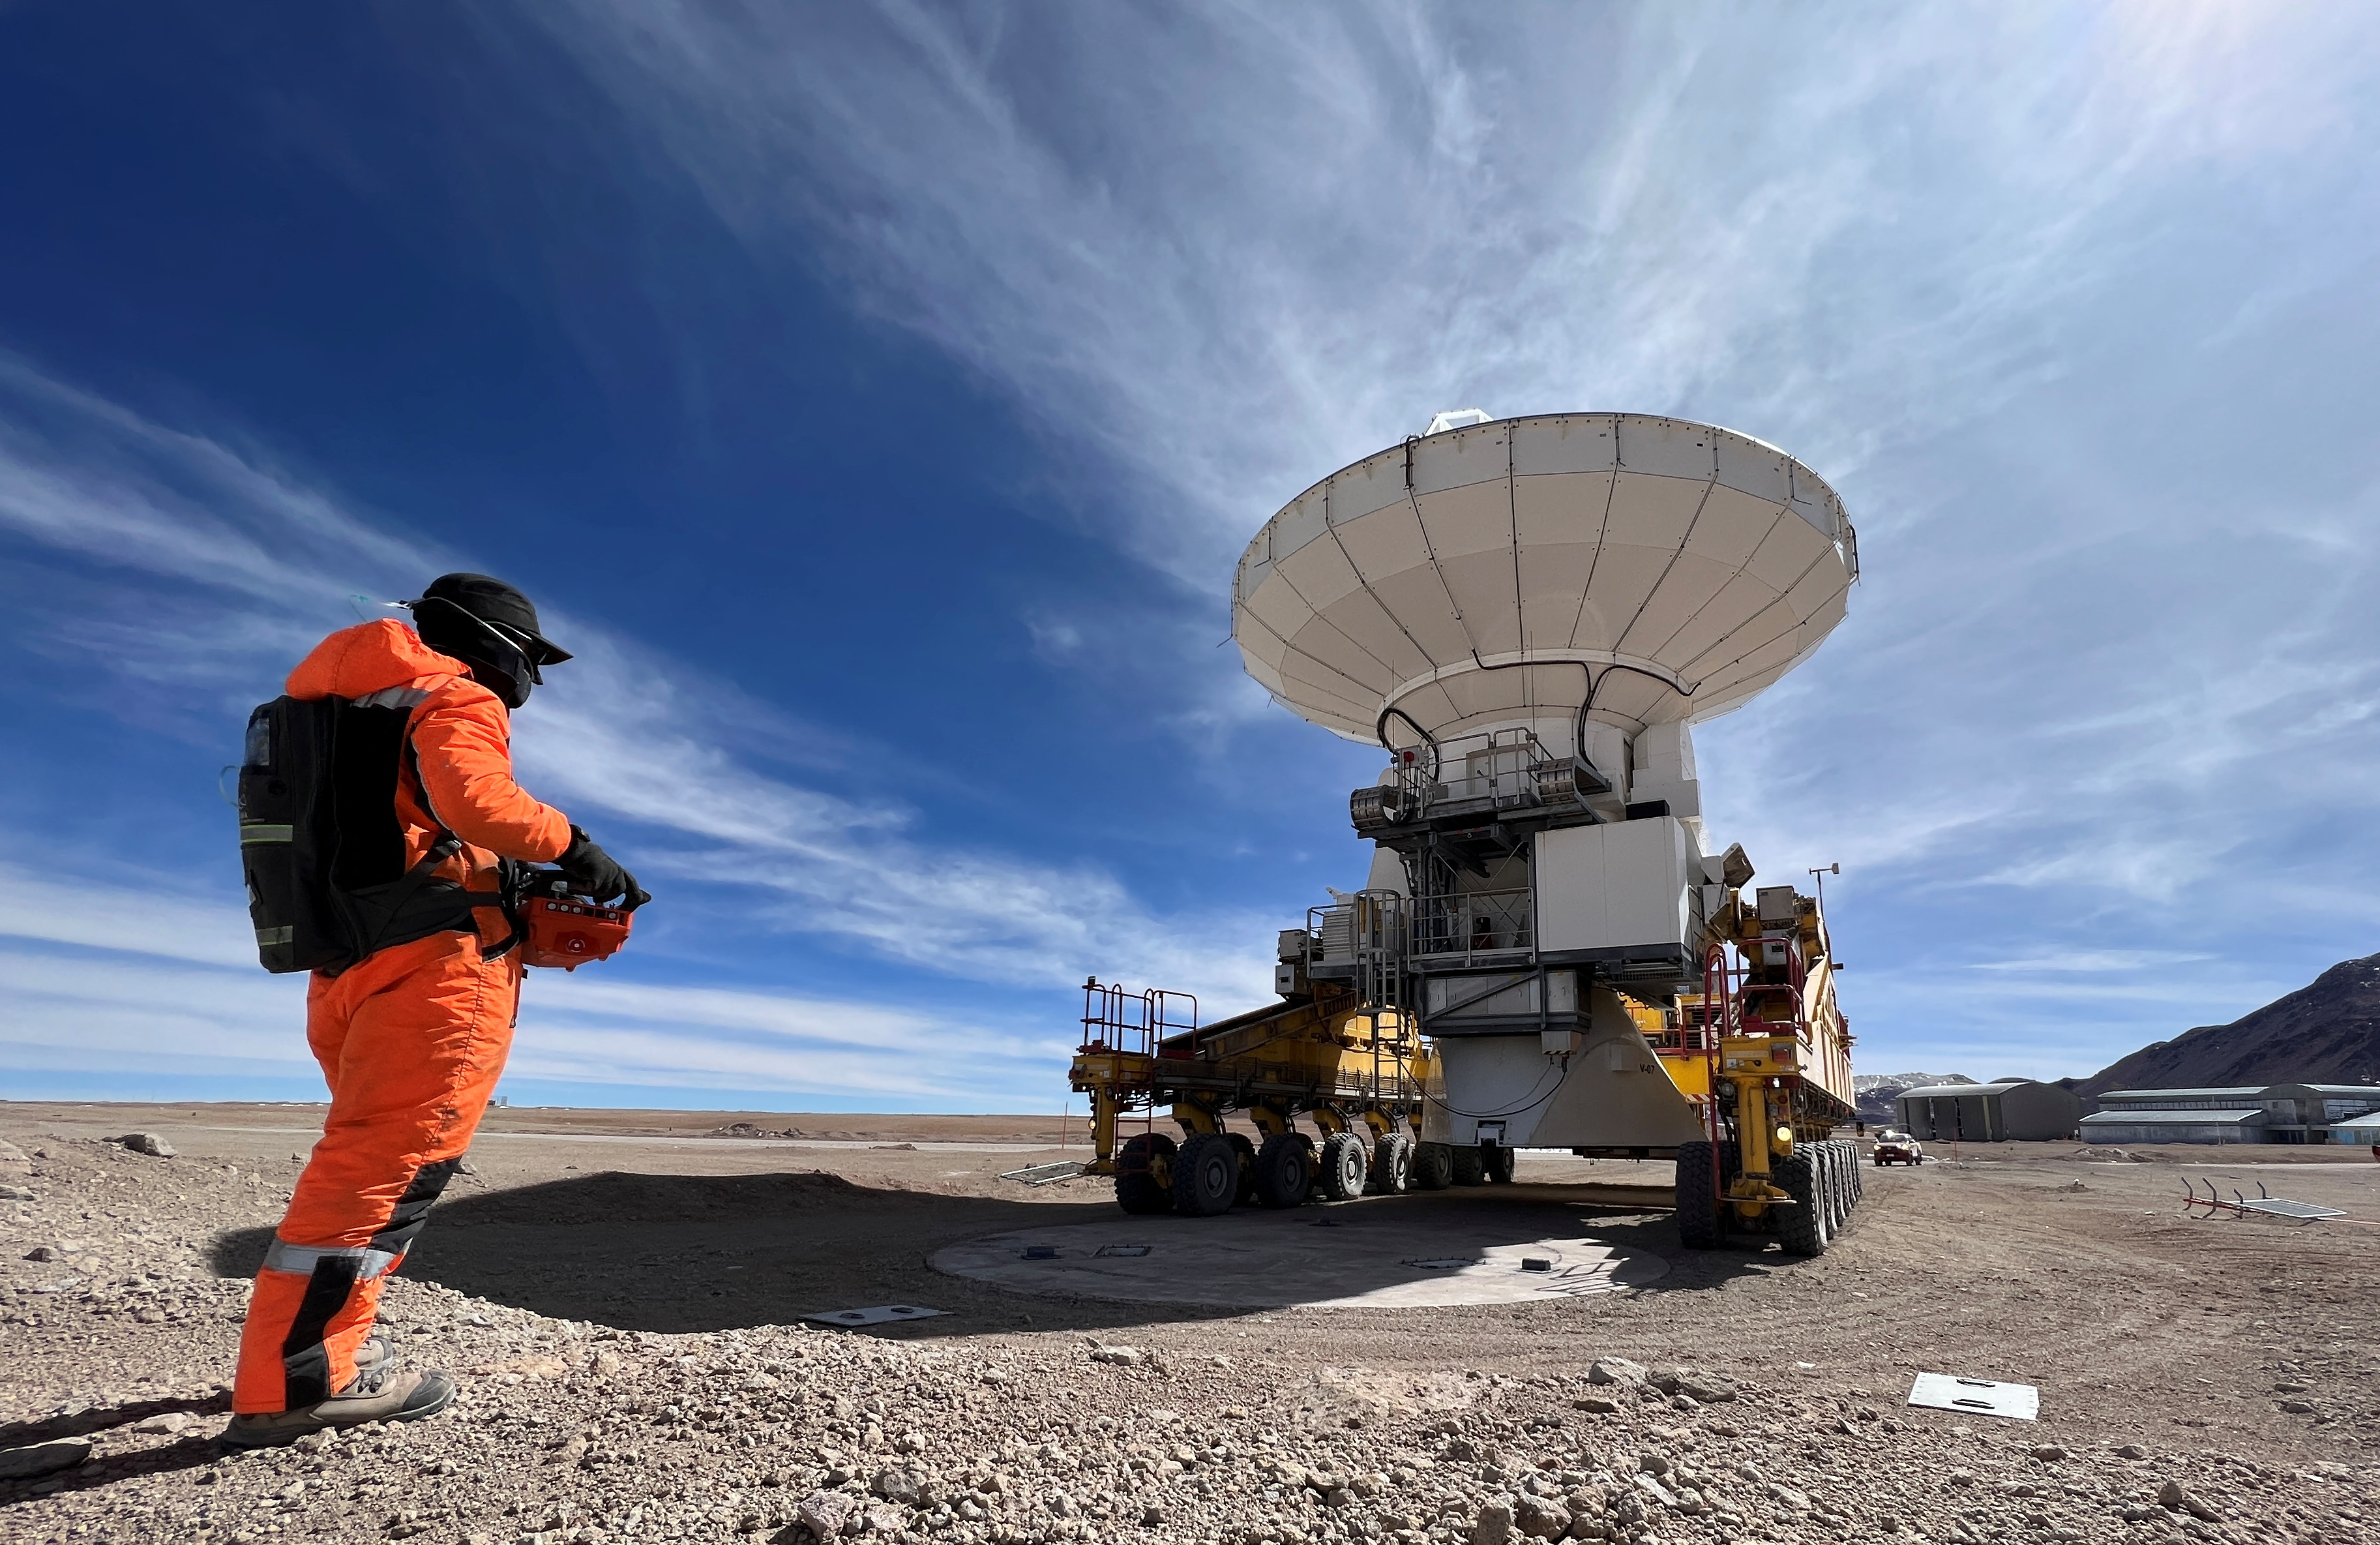 ALMA observatory at the El Llano de Chajnantor in the Atacama desert